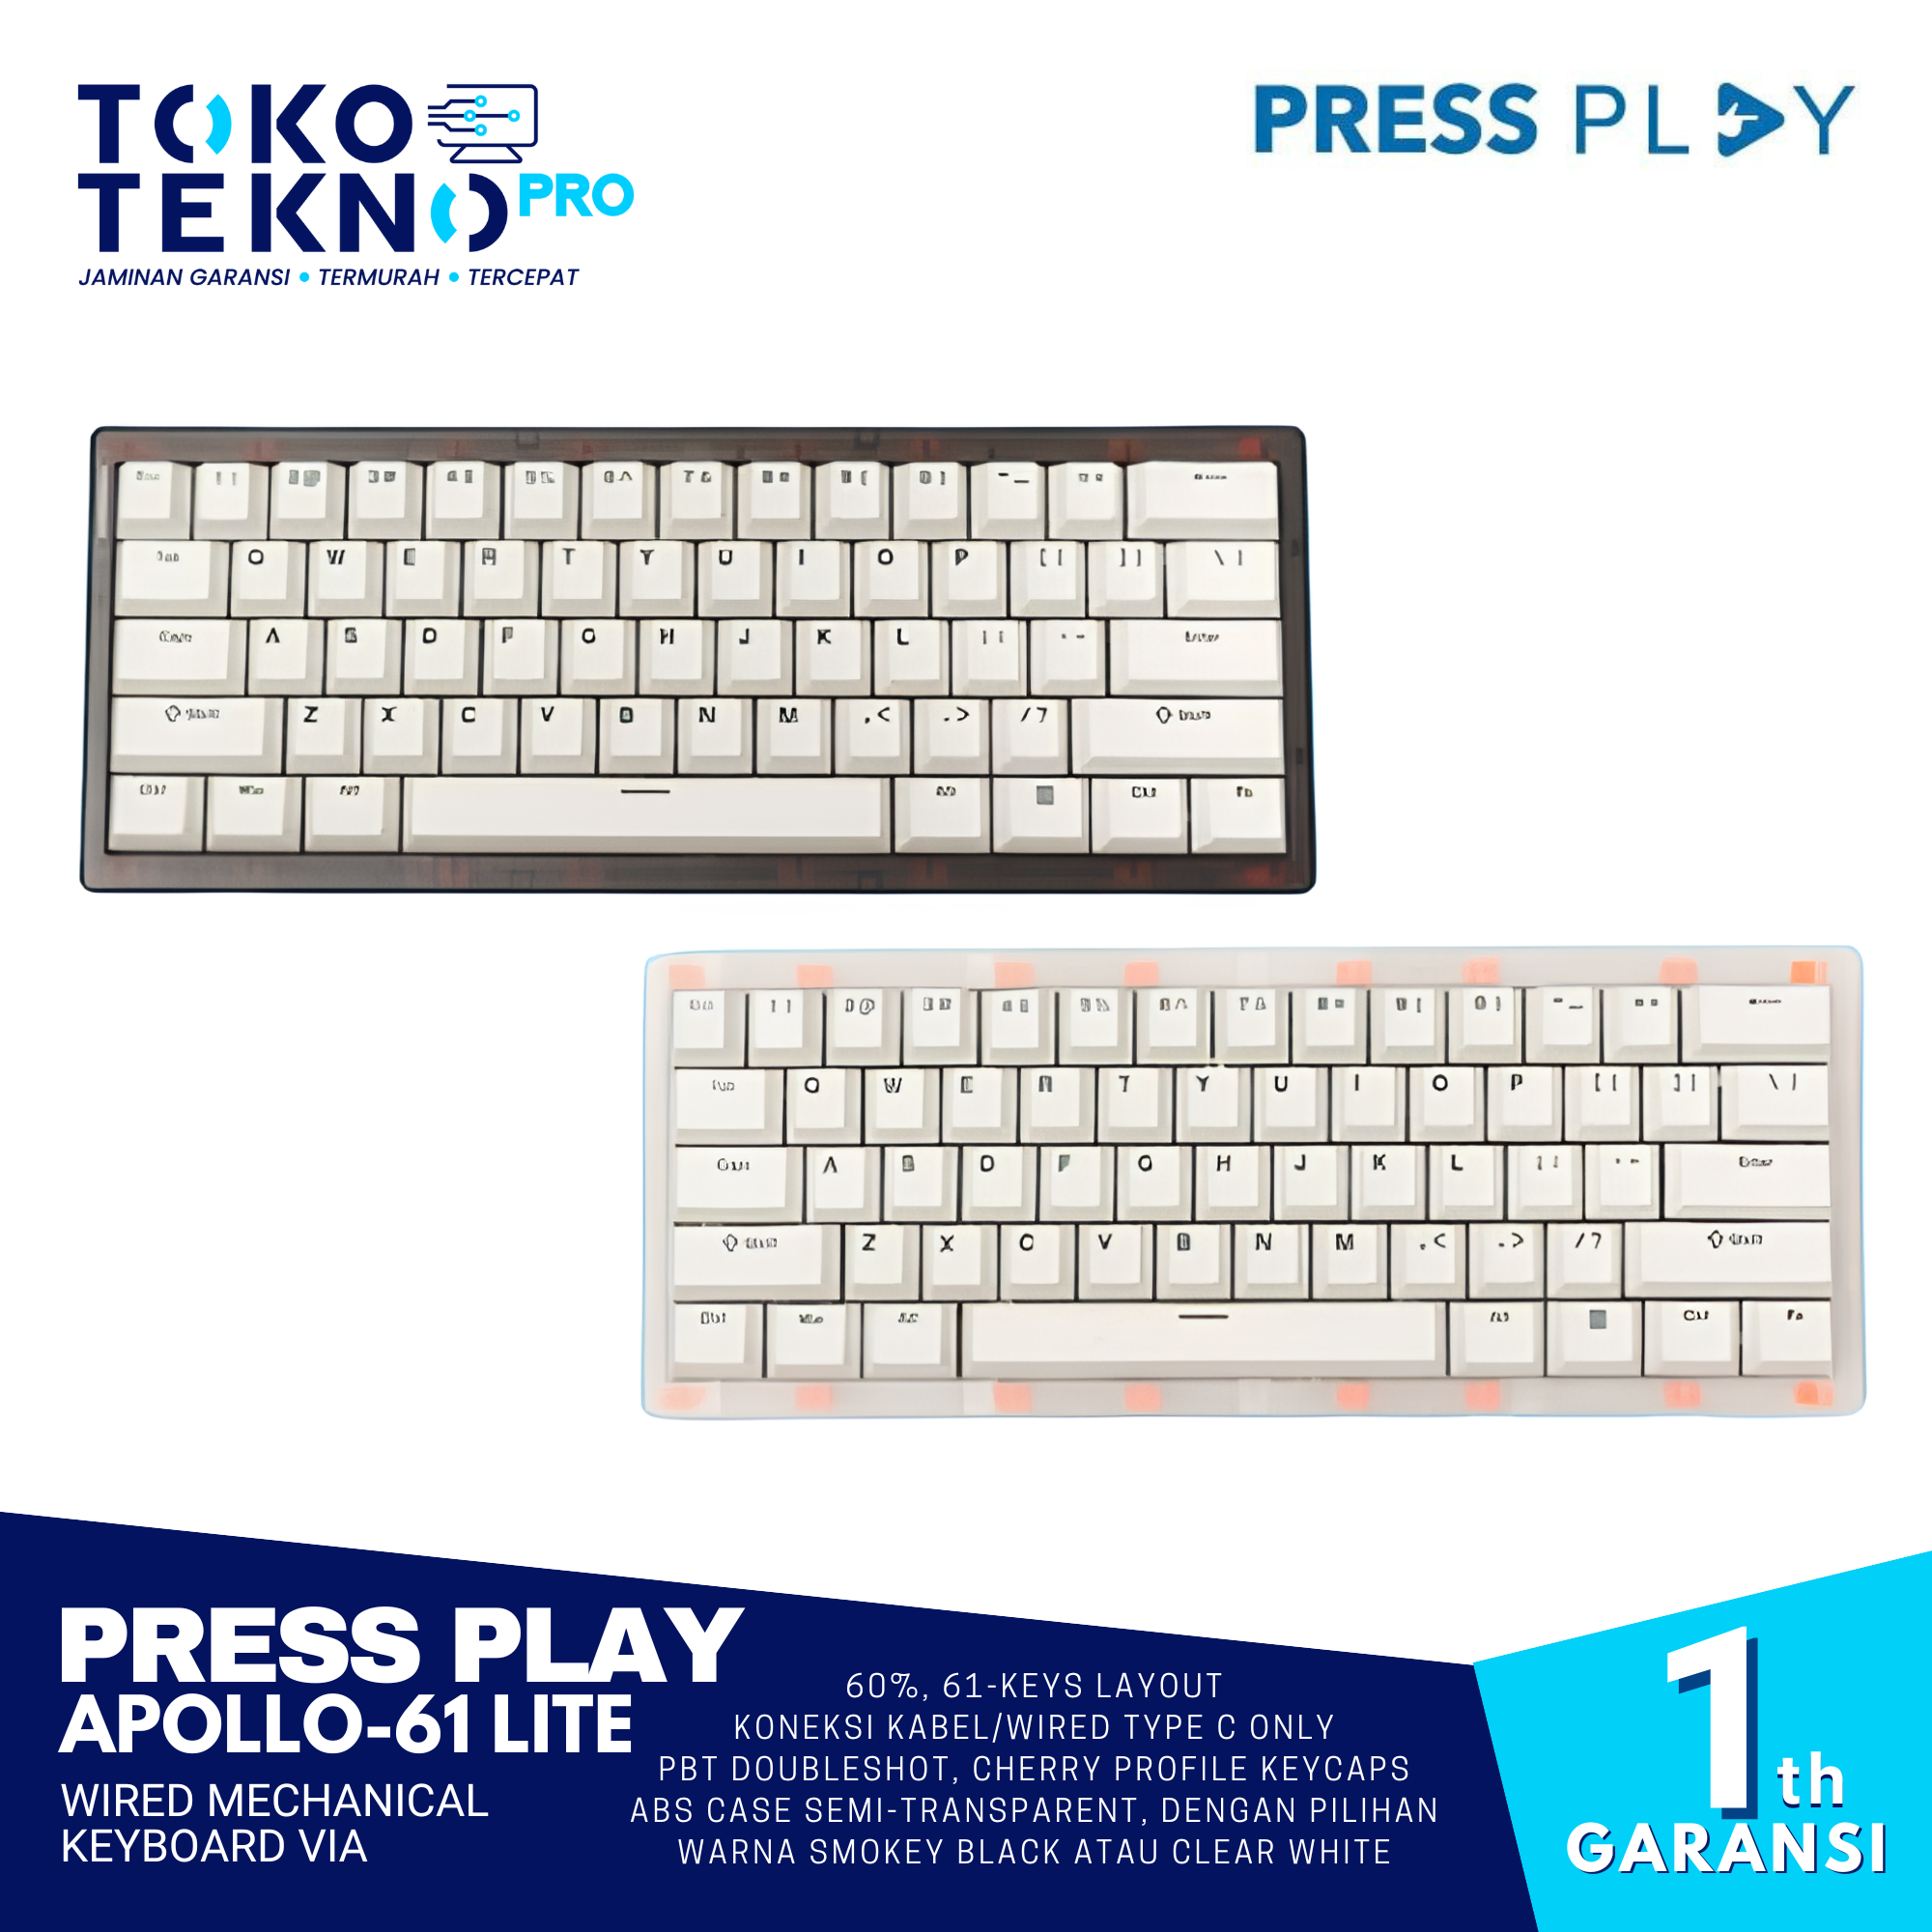 Press Play Apollo-61 Lite